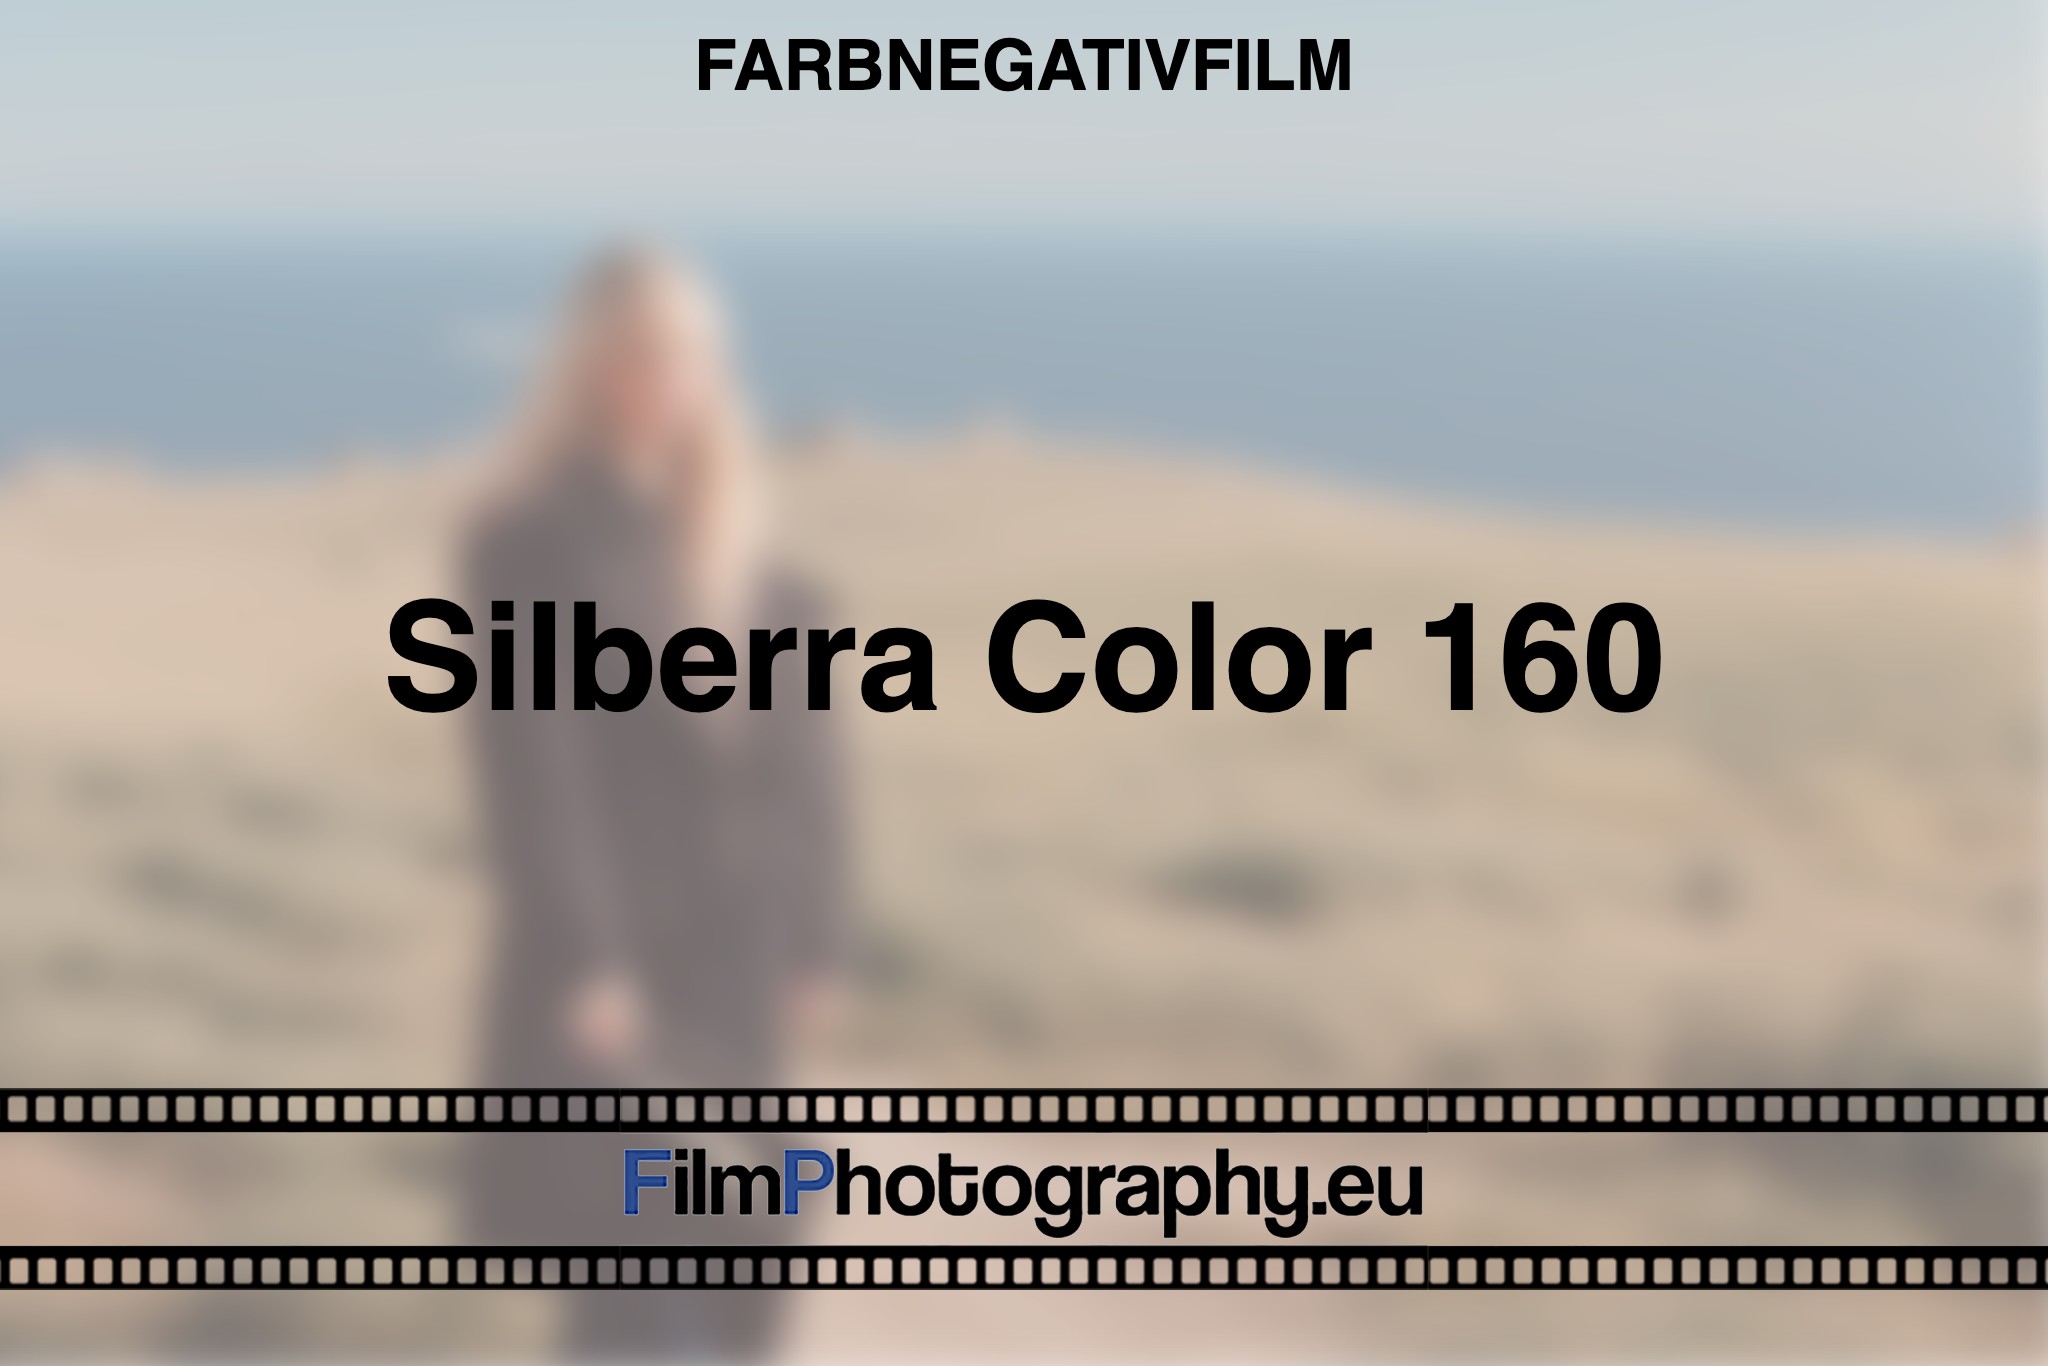 silberra-color-160-farbnegativfilm-bnv